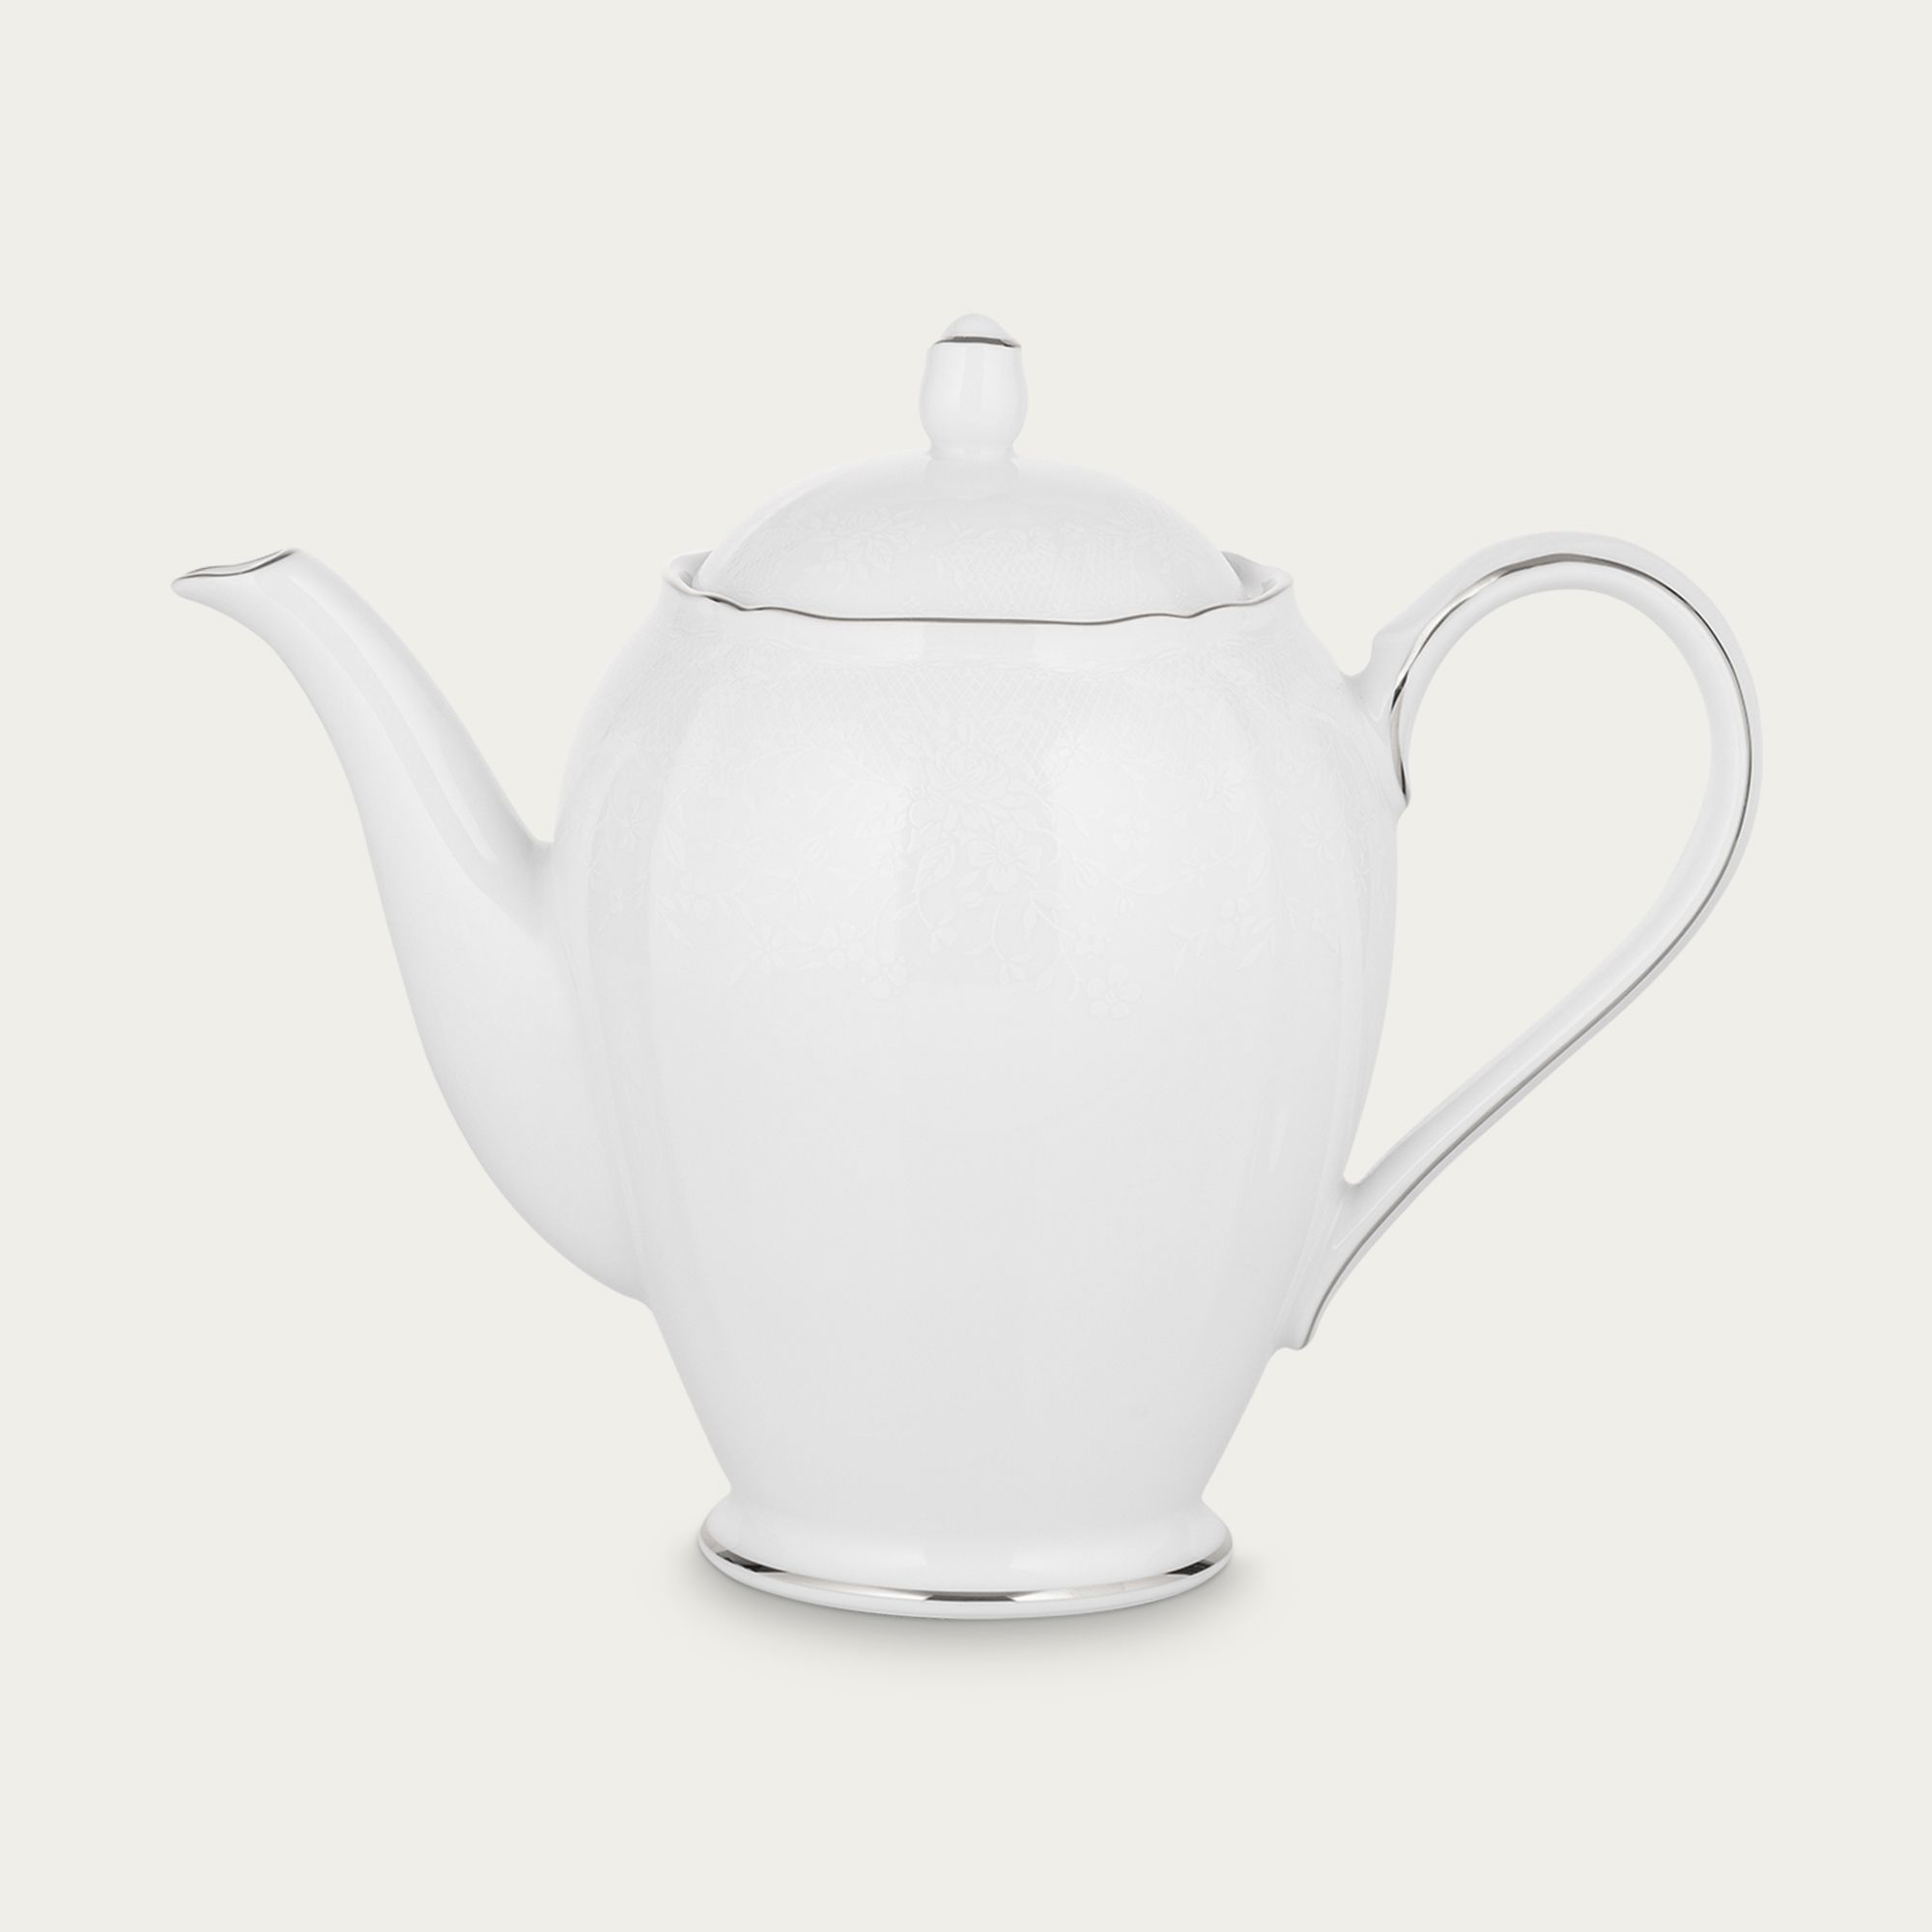  Ấm trà (bình trà) 950ml | Princess Bouquet Platinum 1661L-94453 